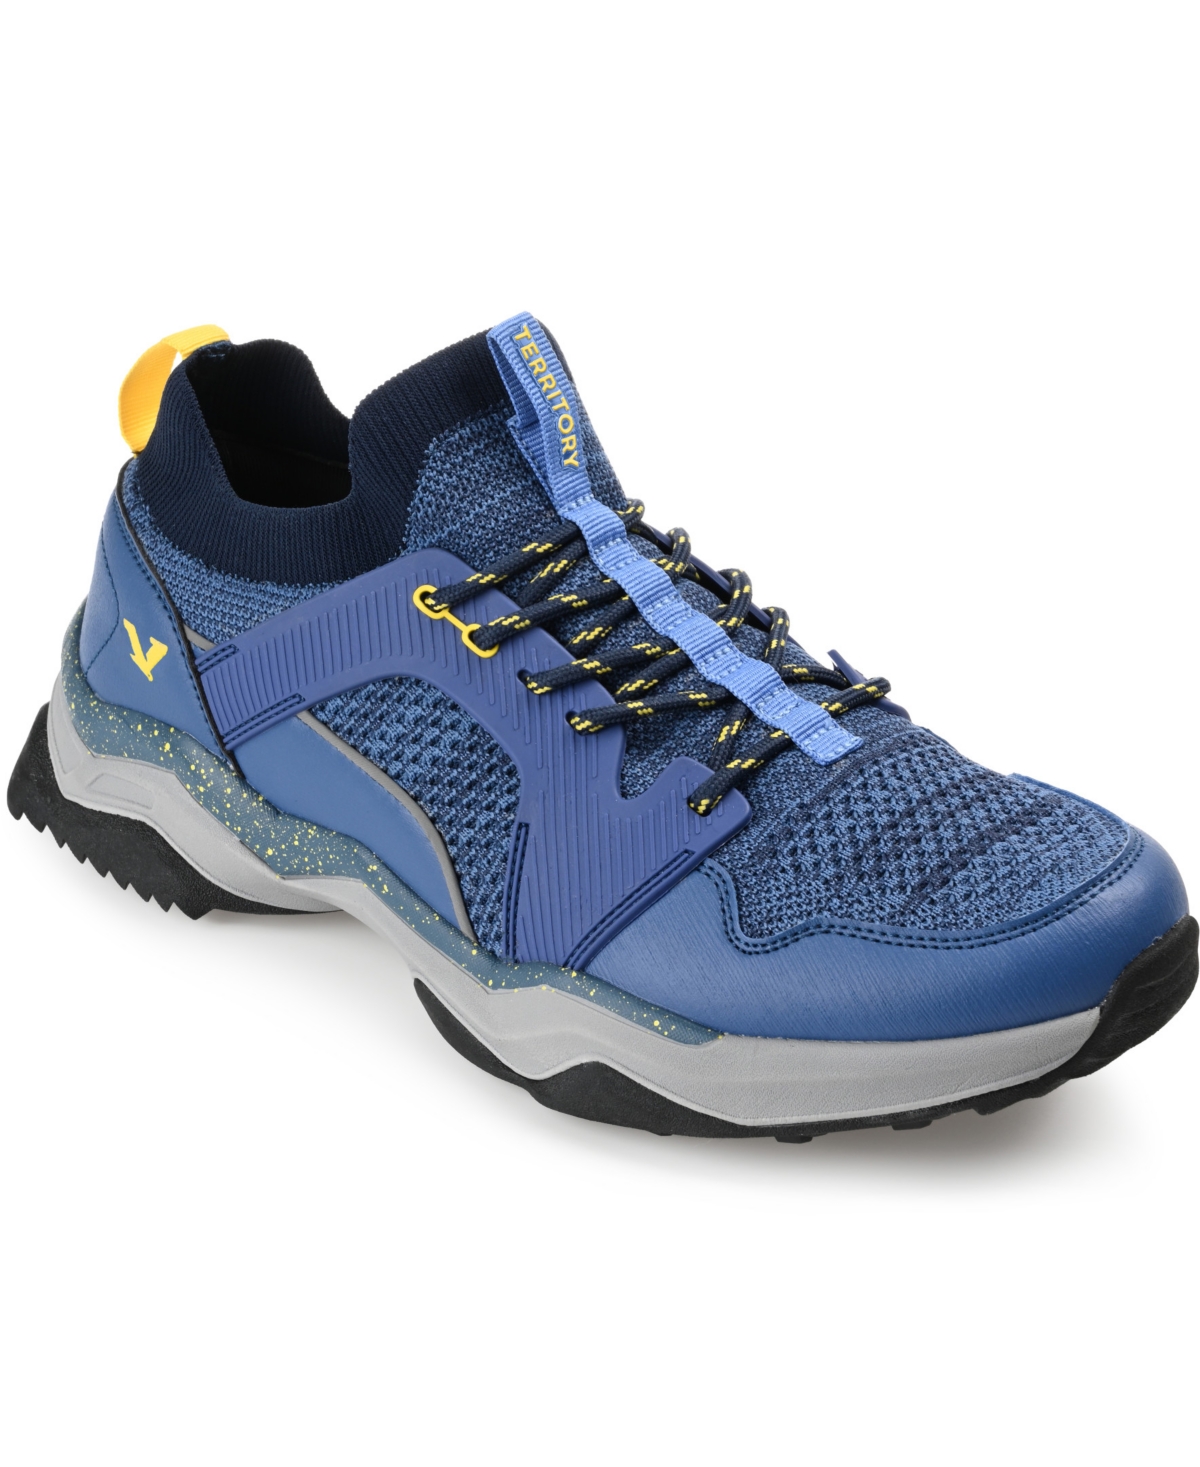 Men's Yosemite Water-resistant Knit Trail Sneakers - Blue